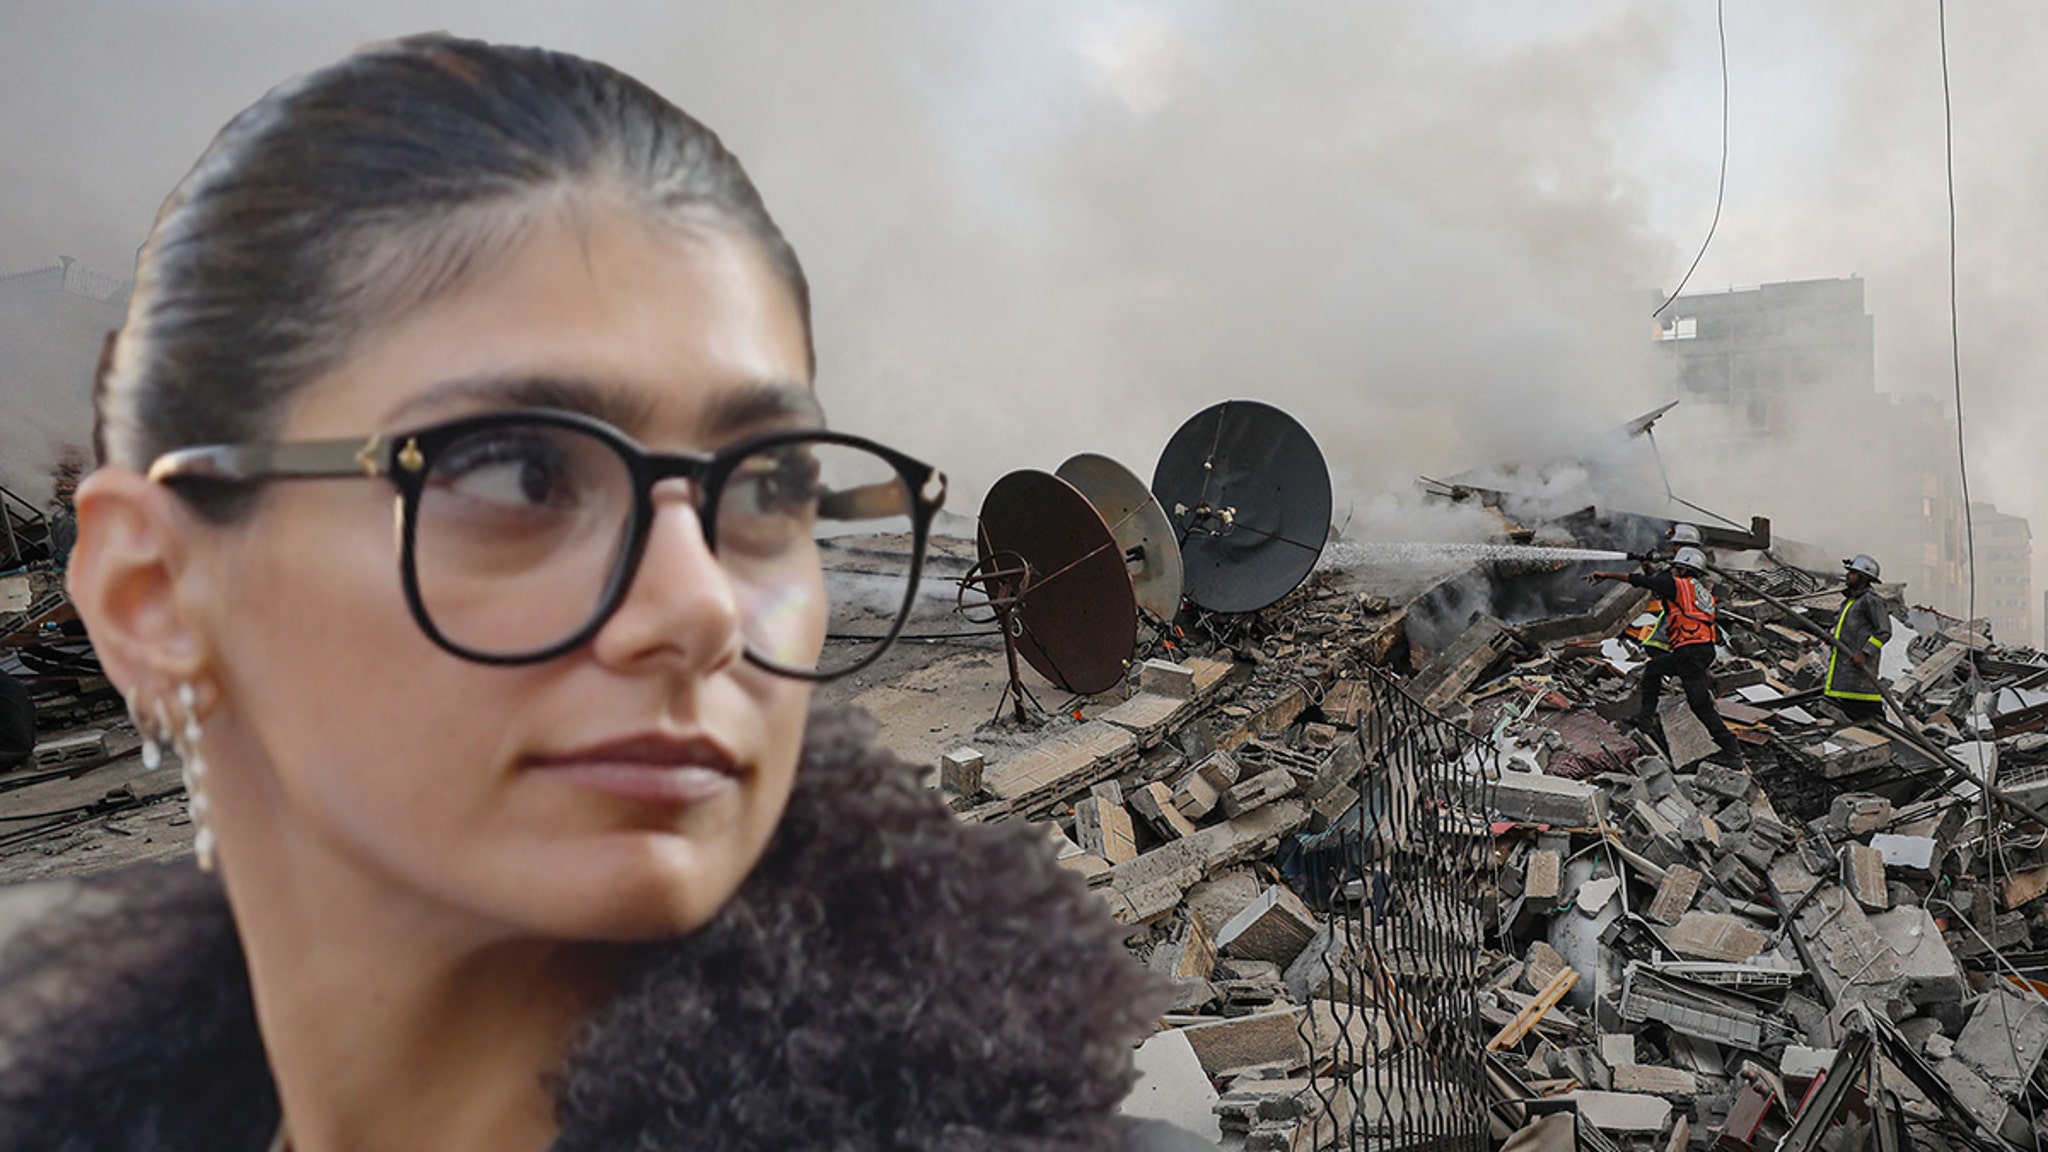 Mia Khalife Channel - Mia Khalifa Shares Pro-Hamas Thoughts Amid Israel Attacks, Catches Flak  Online